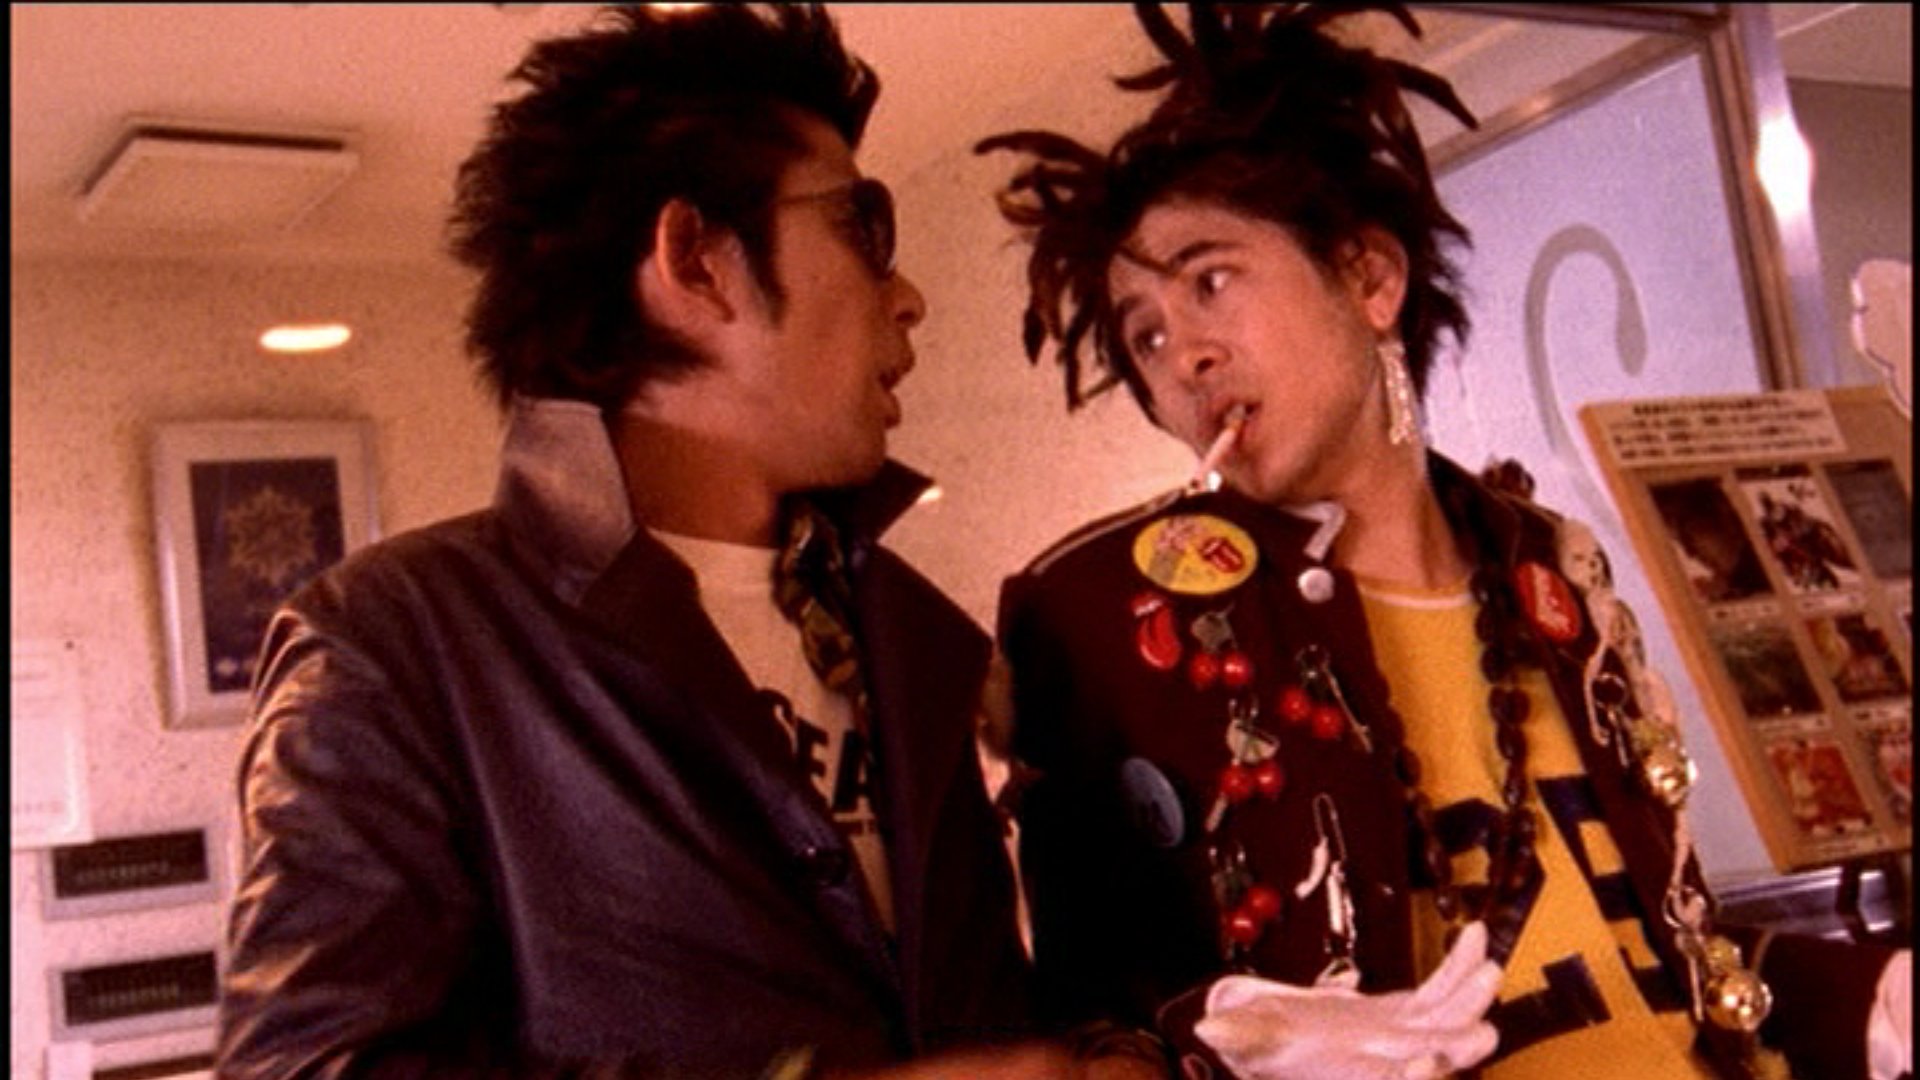 Masatoshi Nagase as Hama Mike and Jai West as Jake the bellhop